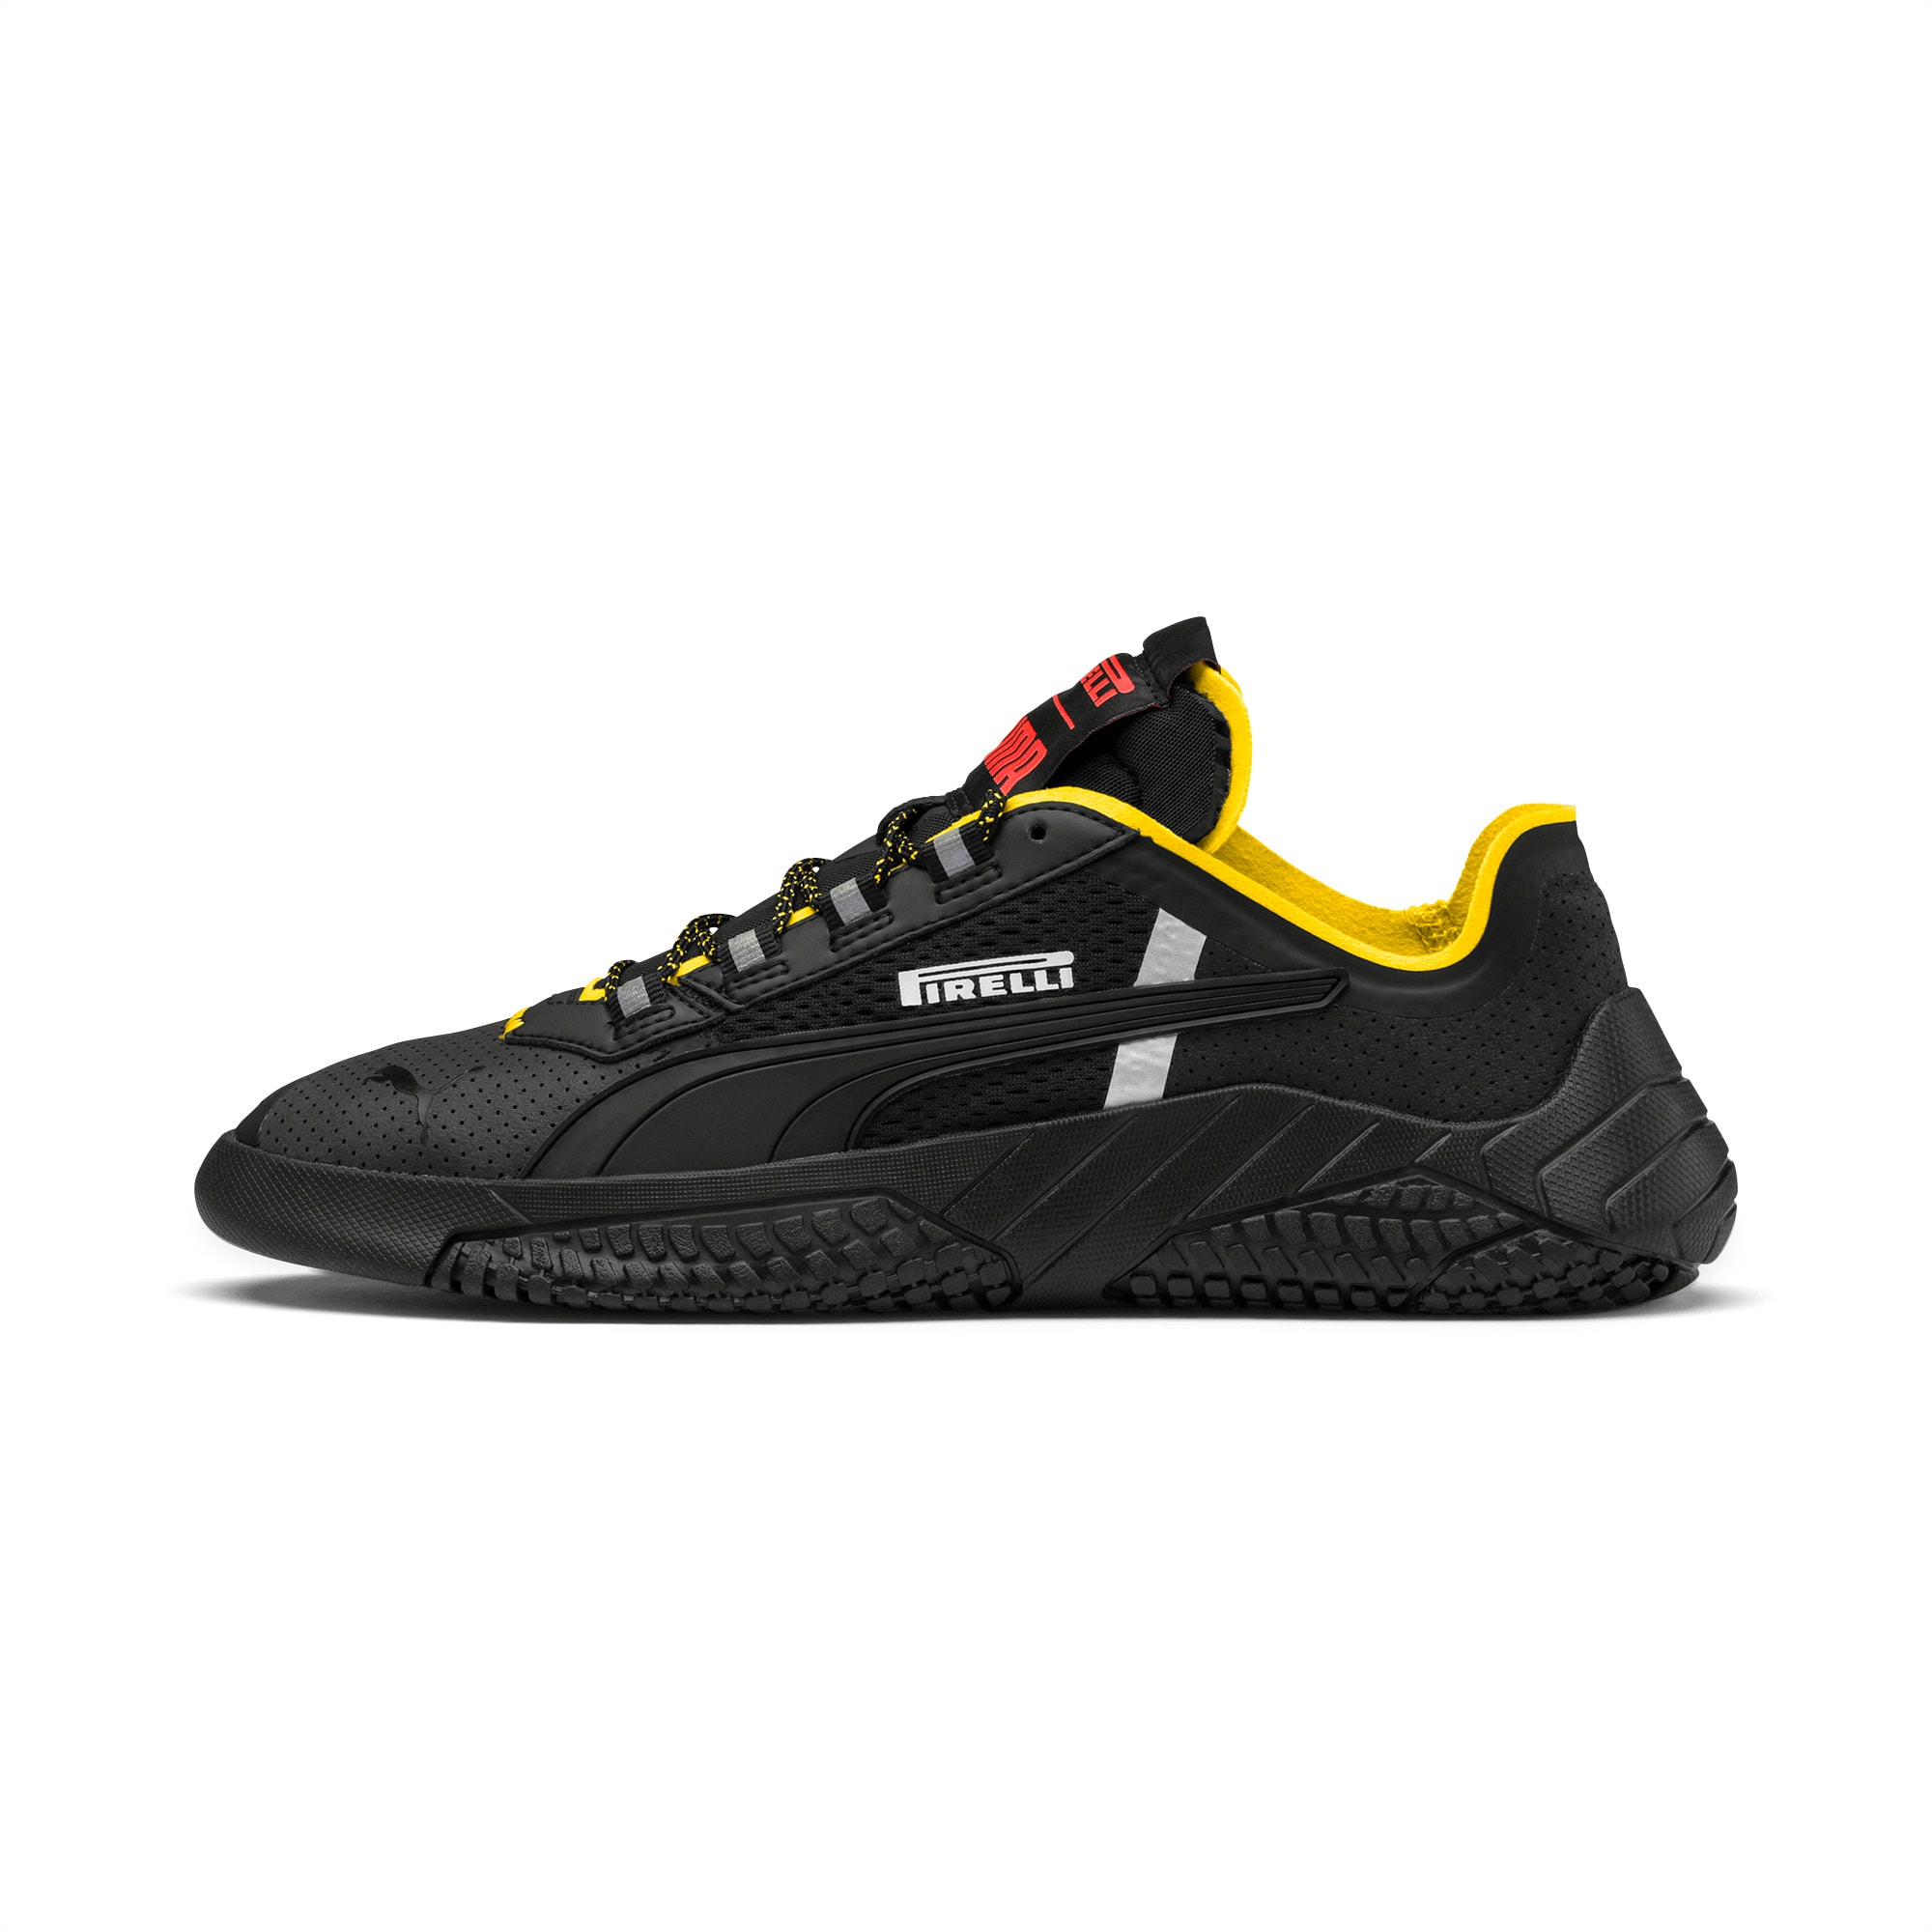 Replicat-X Pirelli Motorsport Shoes 